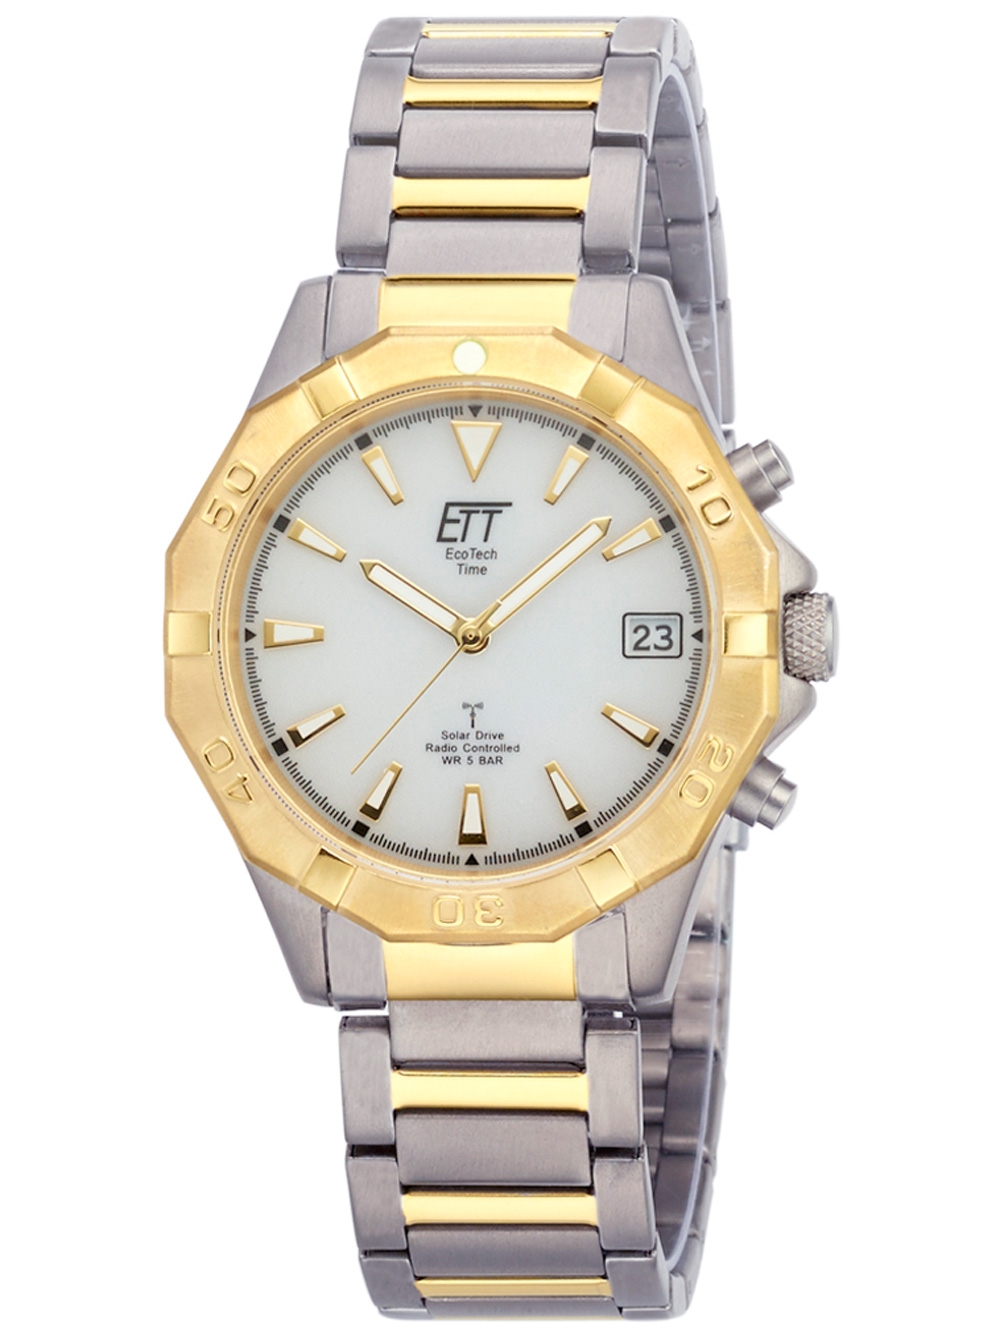 - Uhren Time Eco Tech ETT kaufen